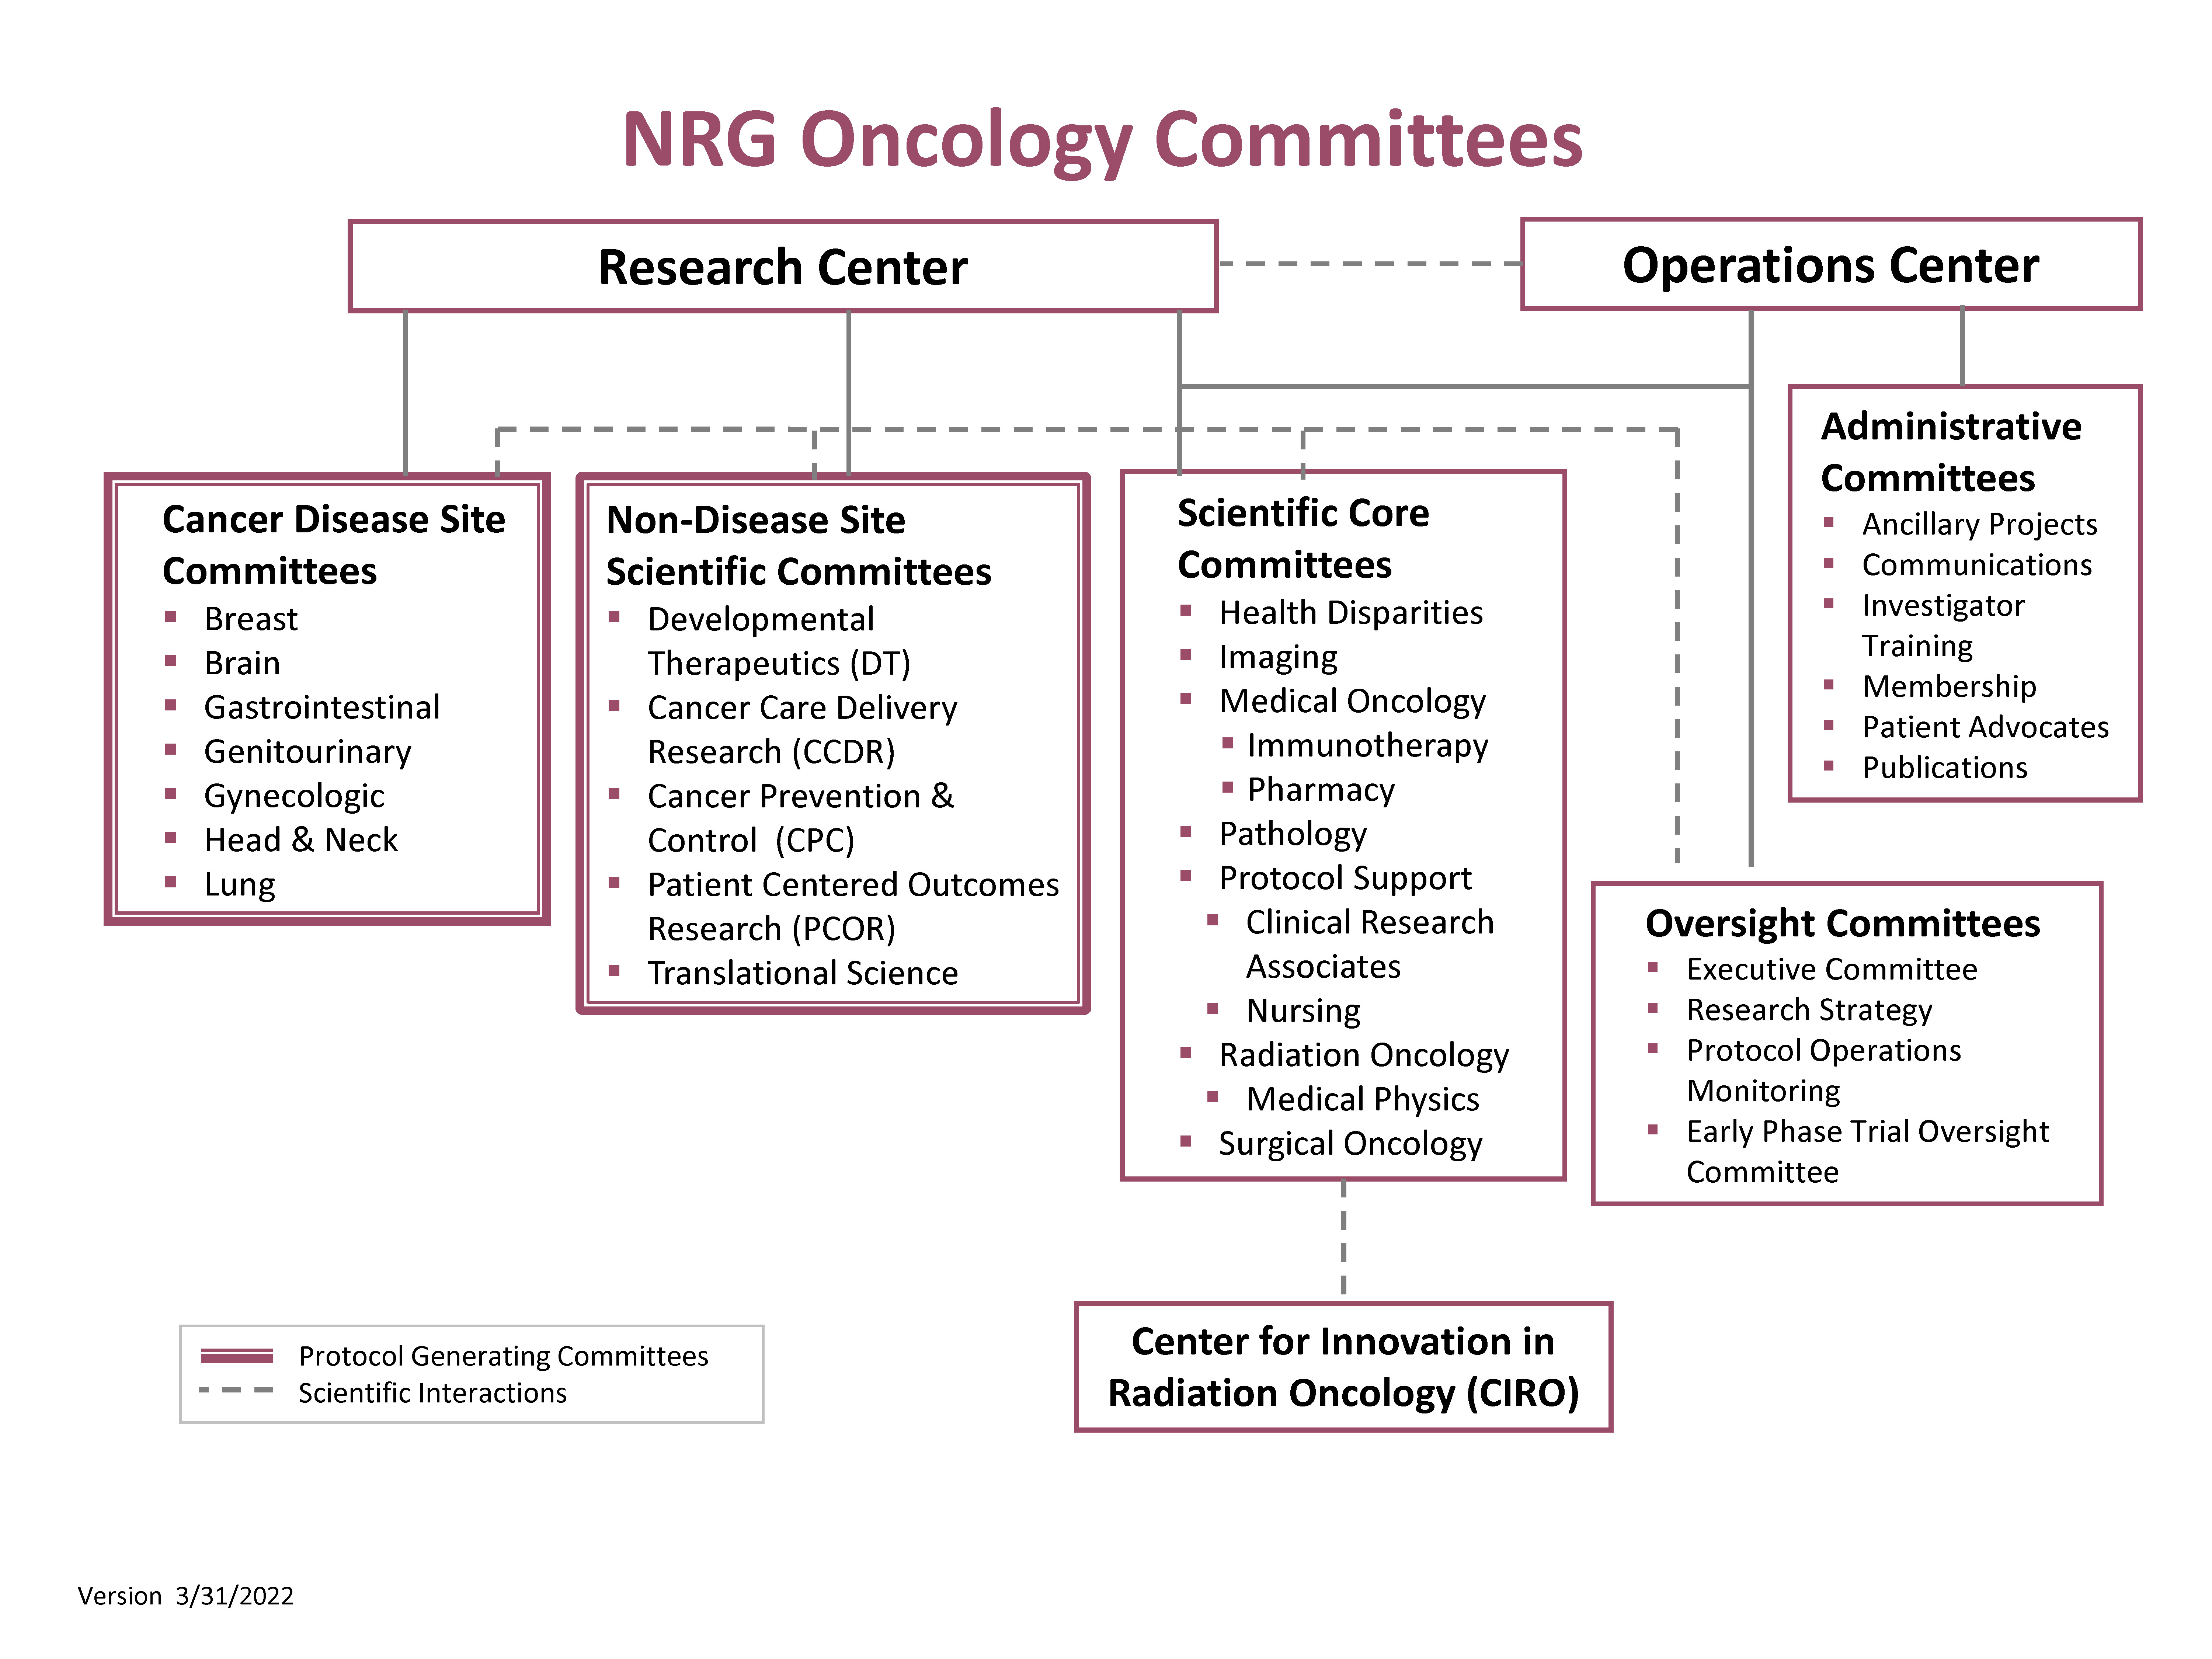 NRG Committees 03-31-2022